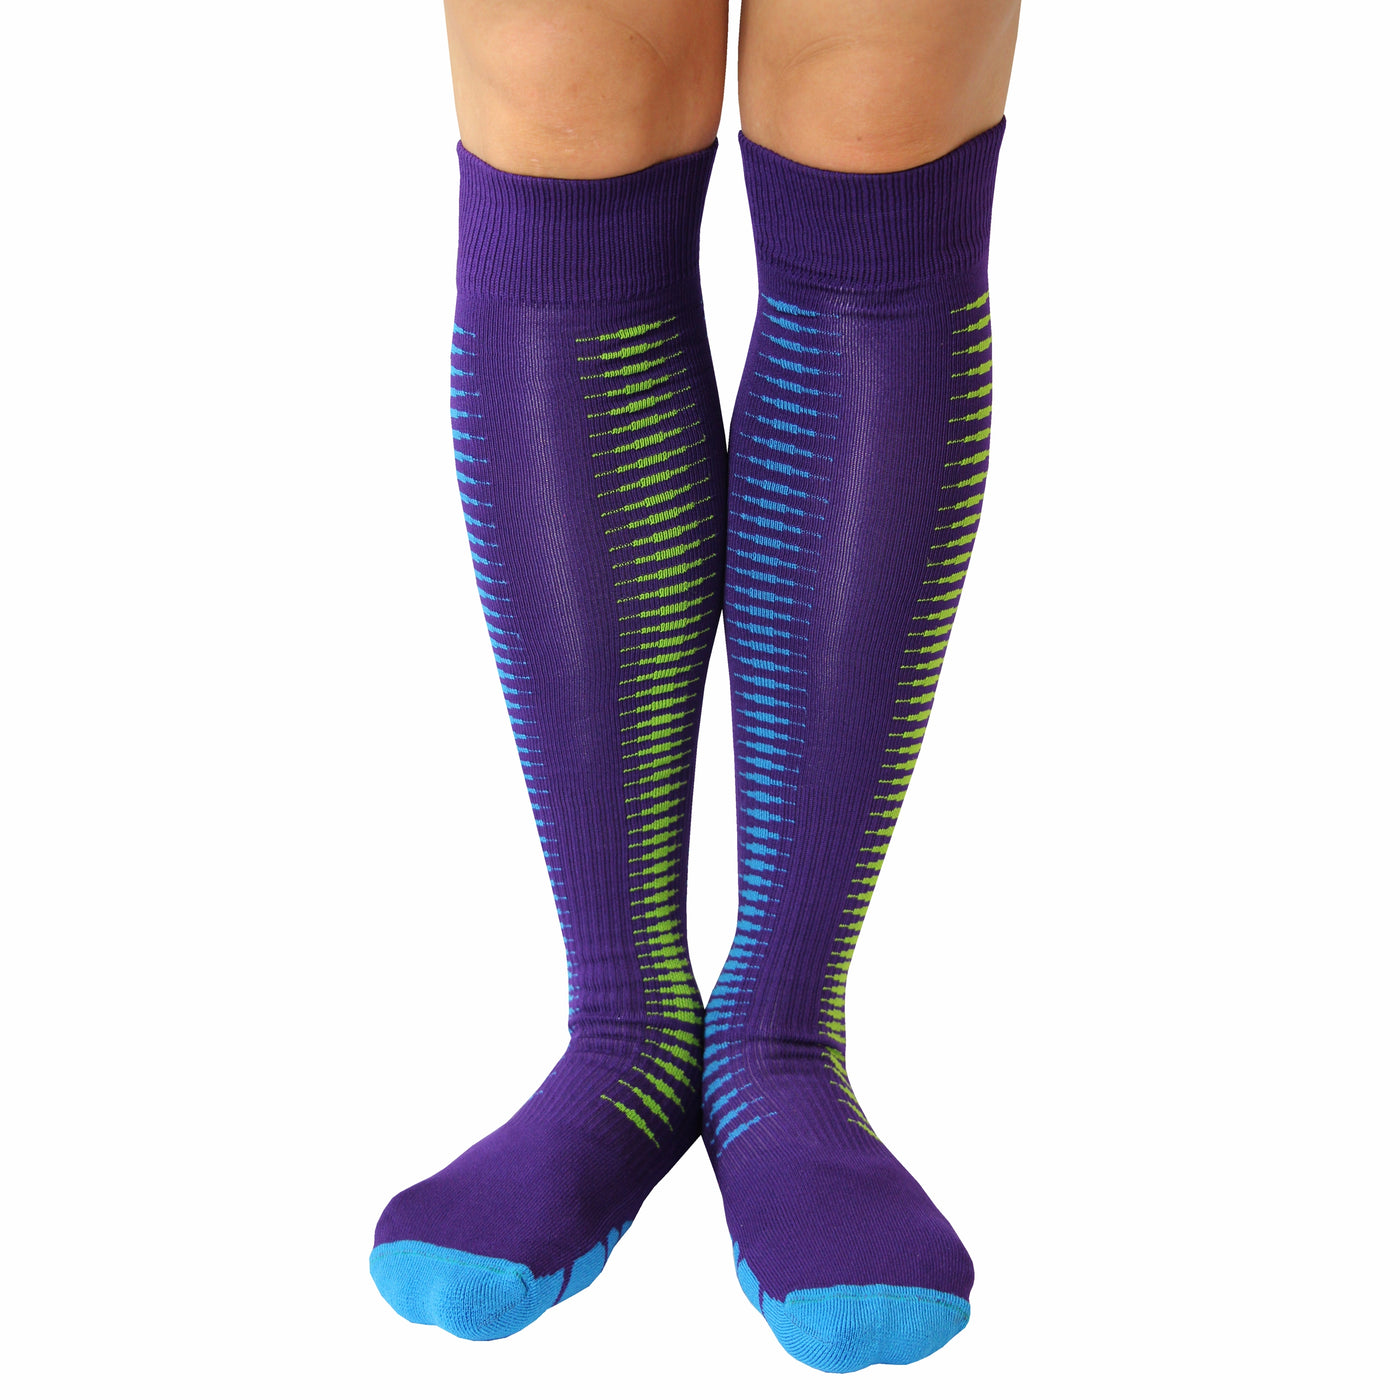 Woman wearing vt1211 compression socks